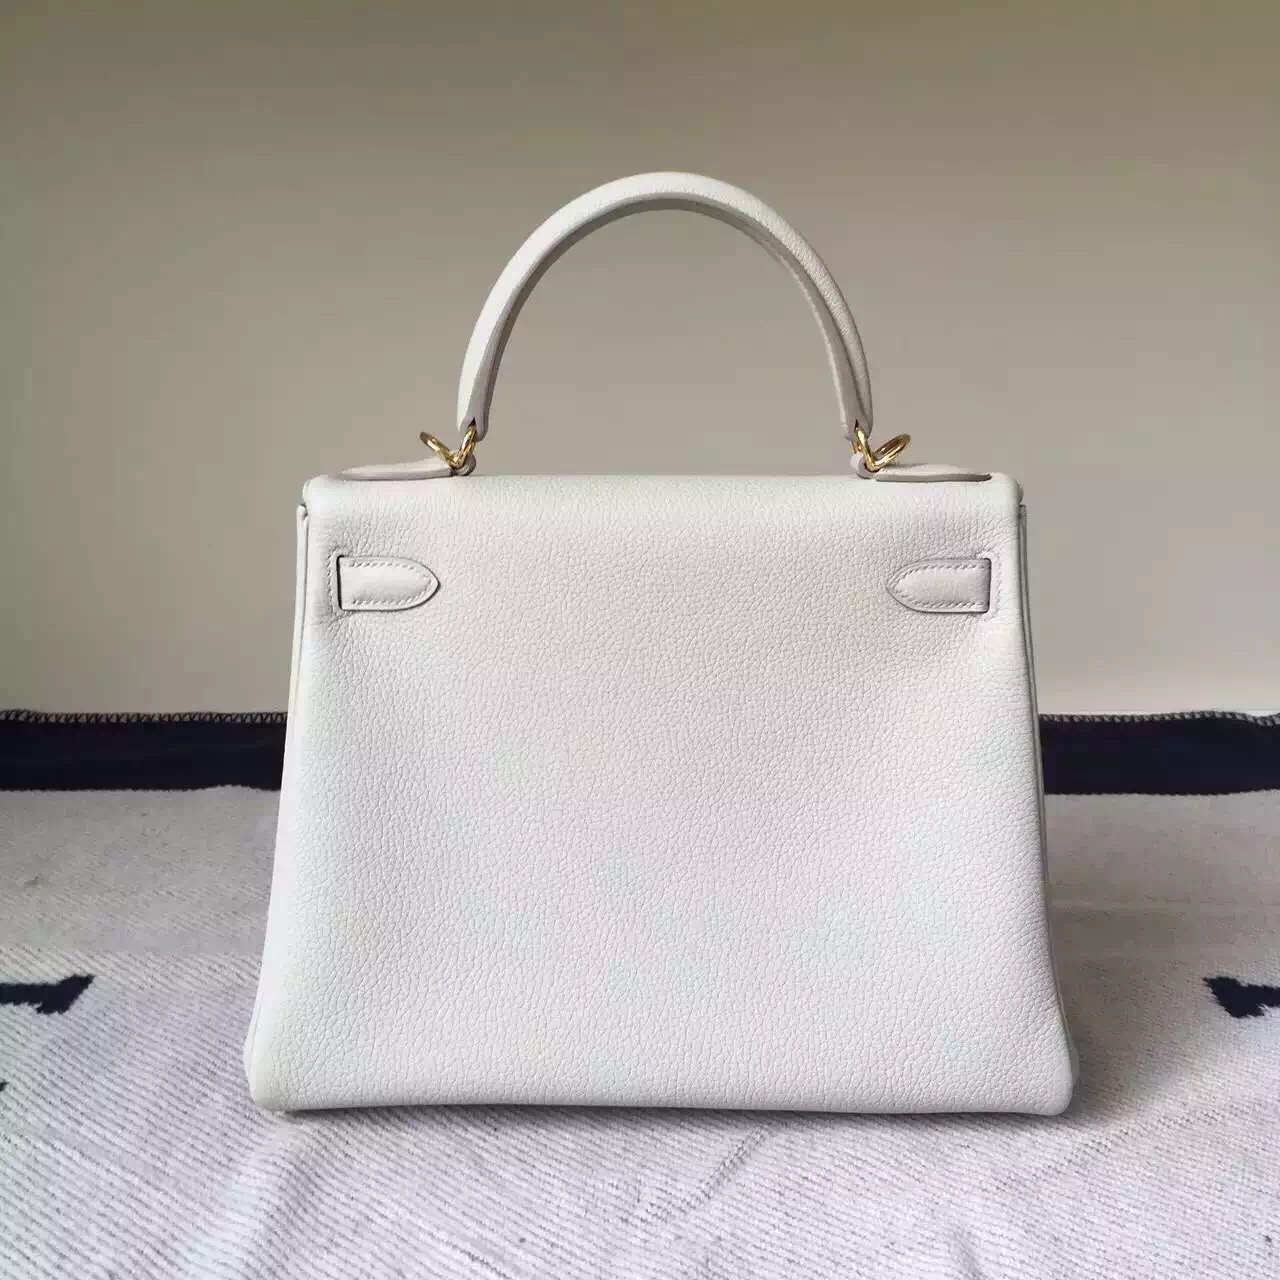 Wholesale Hermes CK80 Pearl Grey Togo Calfskin Leather Kelly Bag 28cm